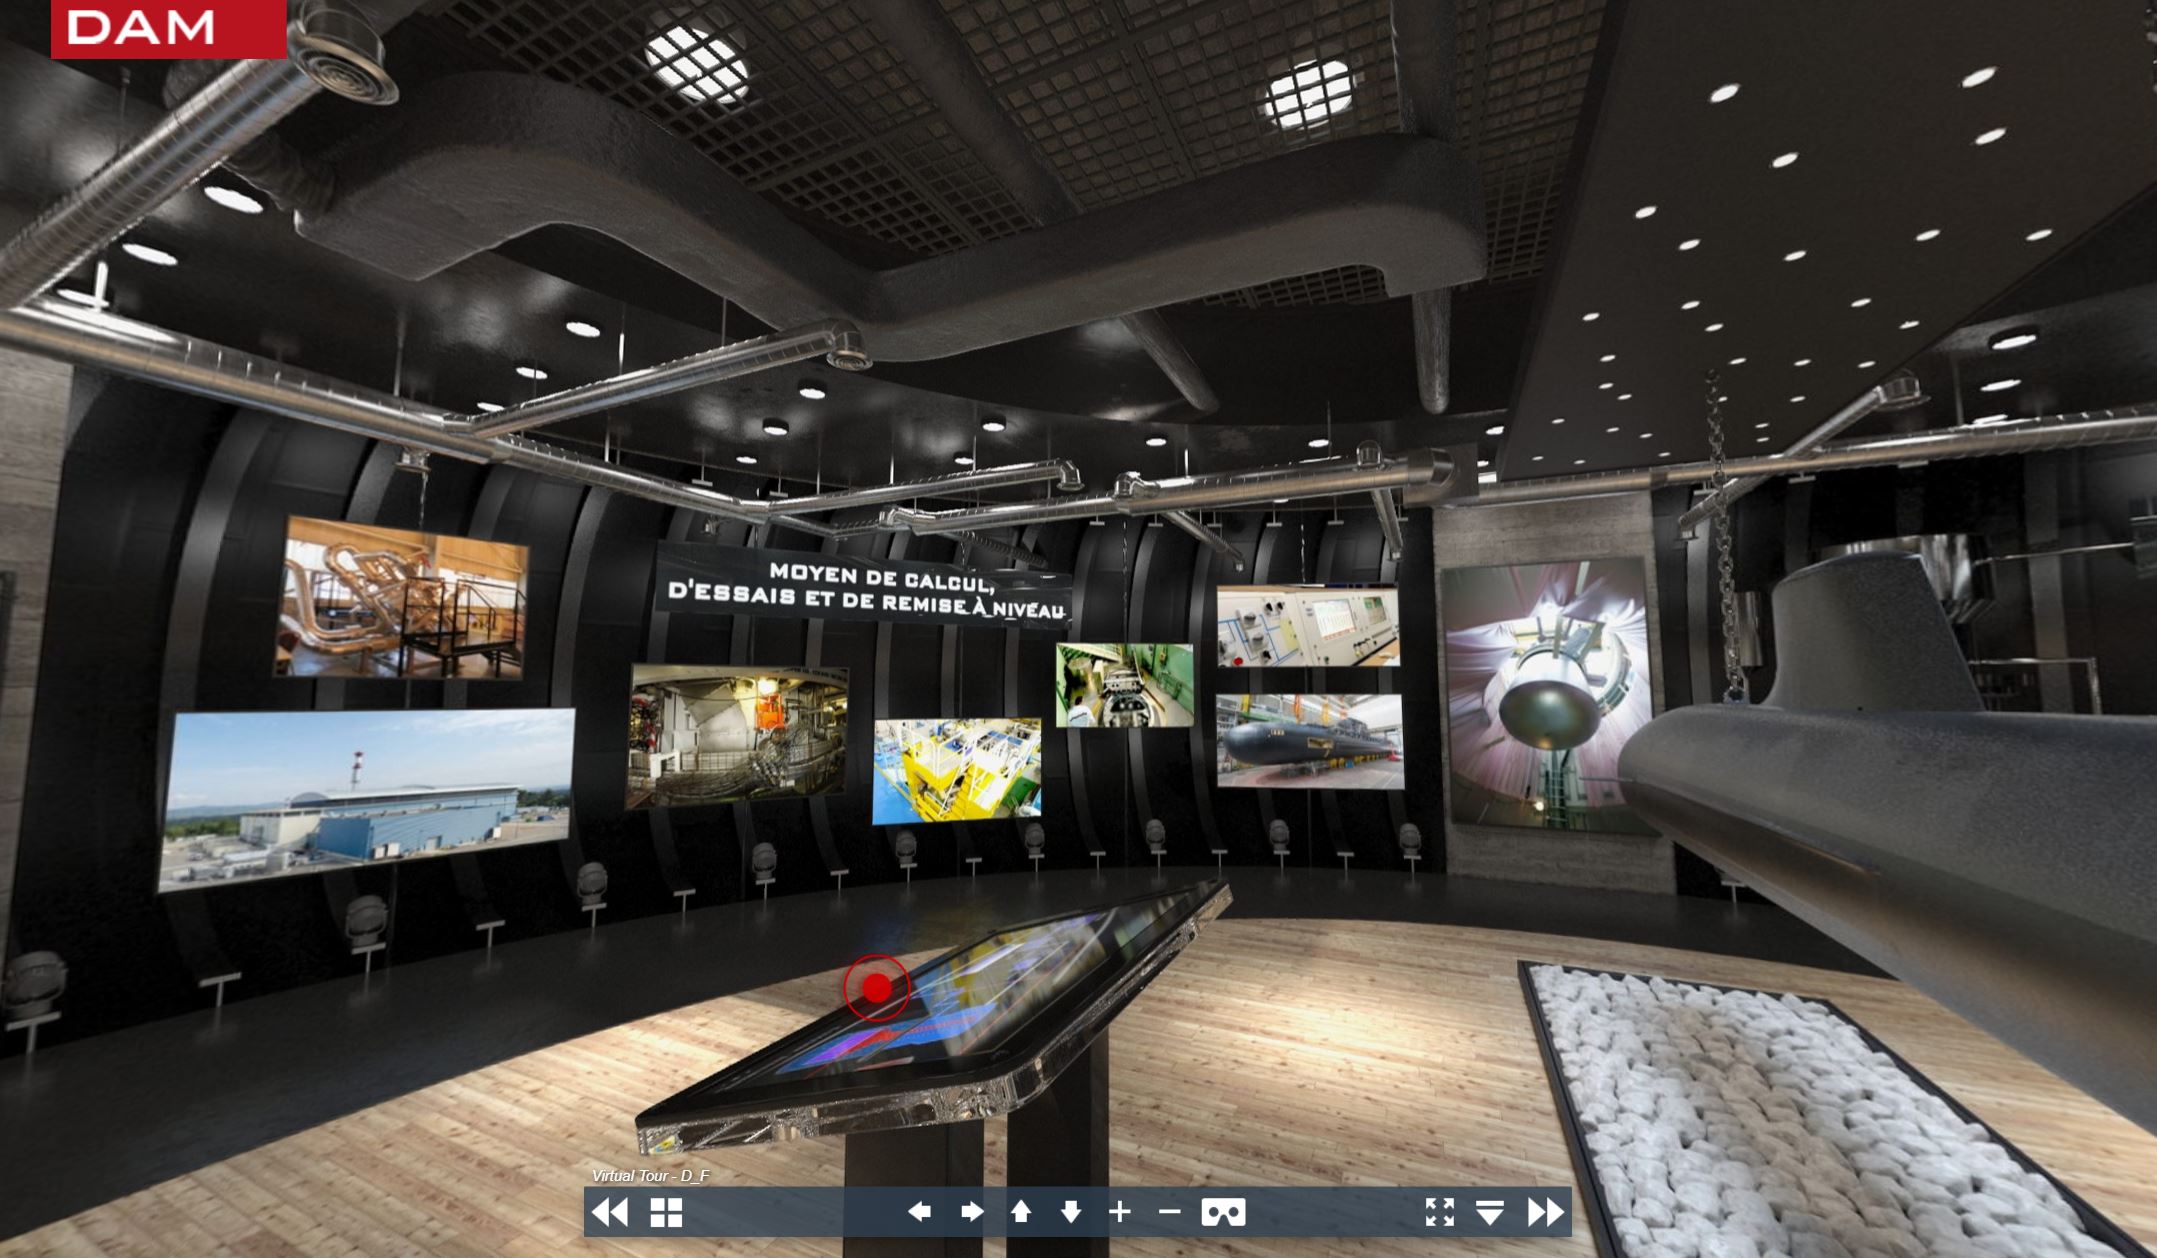 Extrait Image 3D showroom virtuel CEA